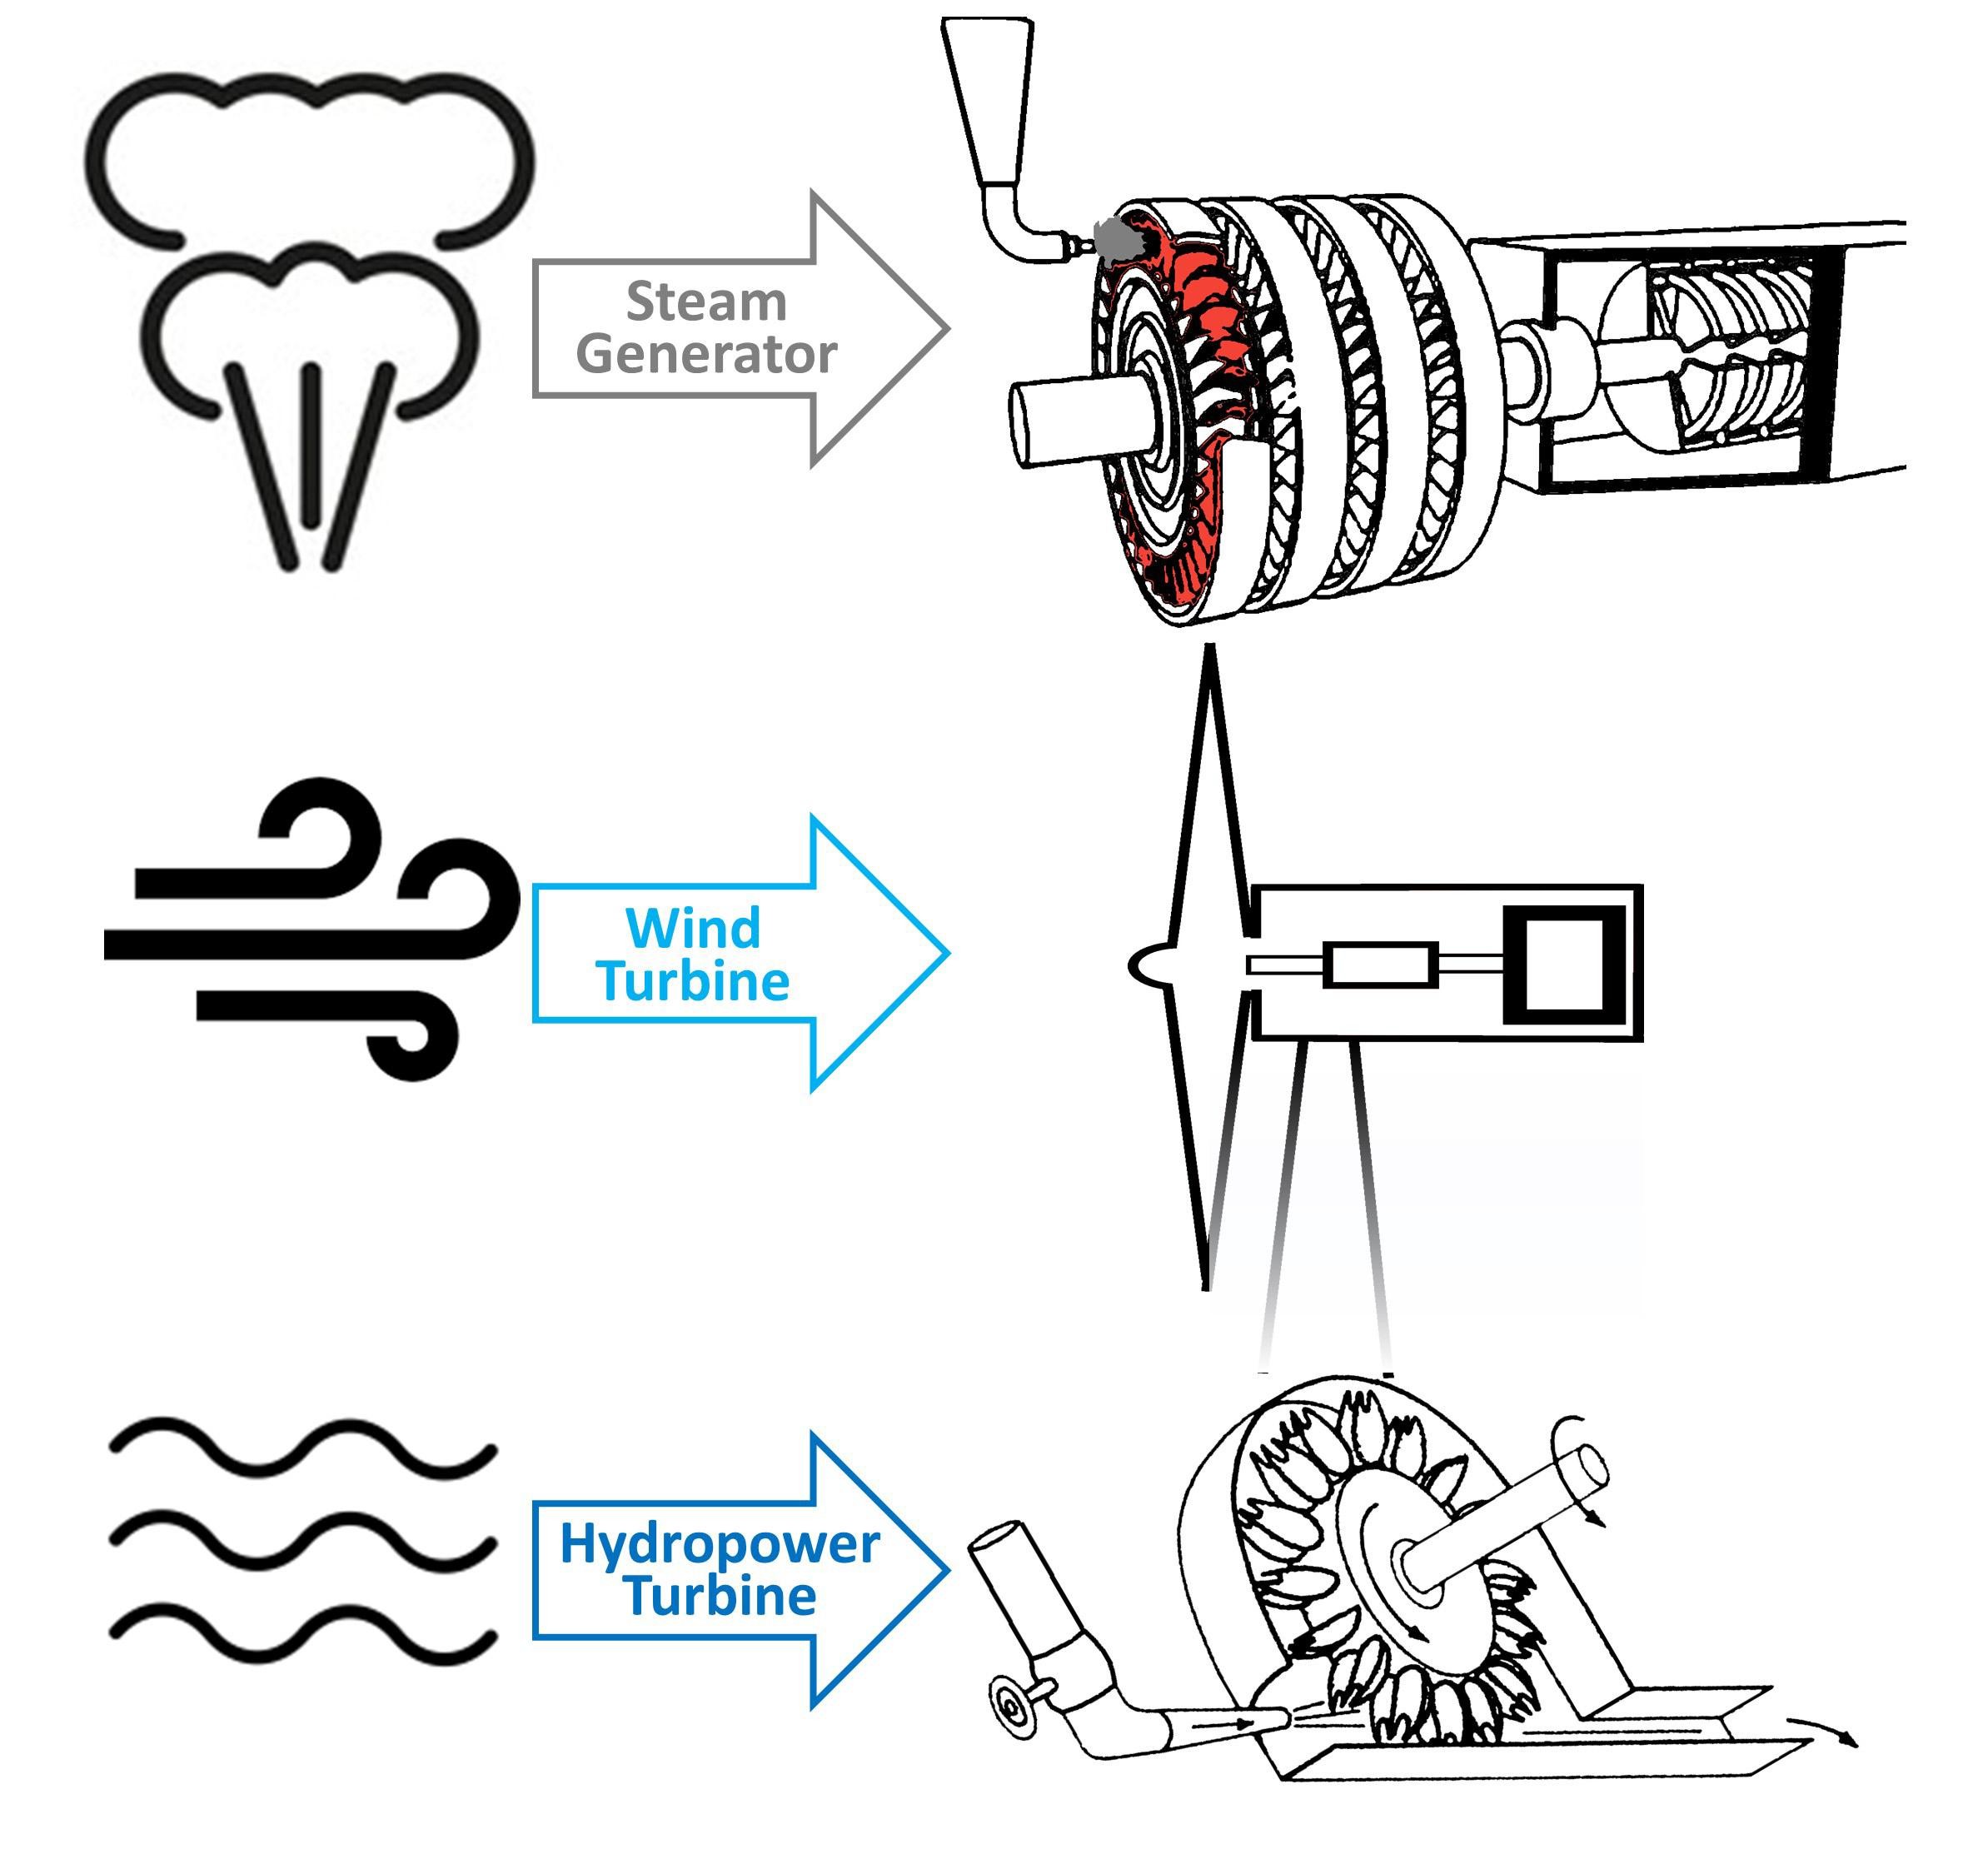 Figure 4. Examples of steam generators, wind turbines and hydropower turbines.